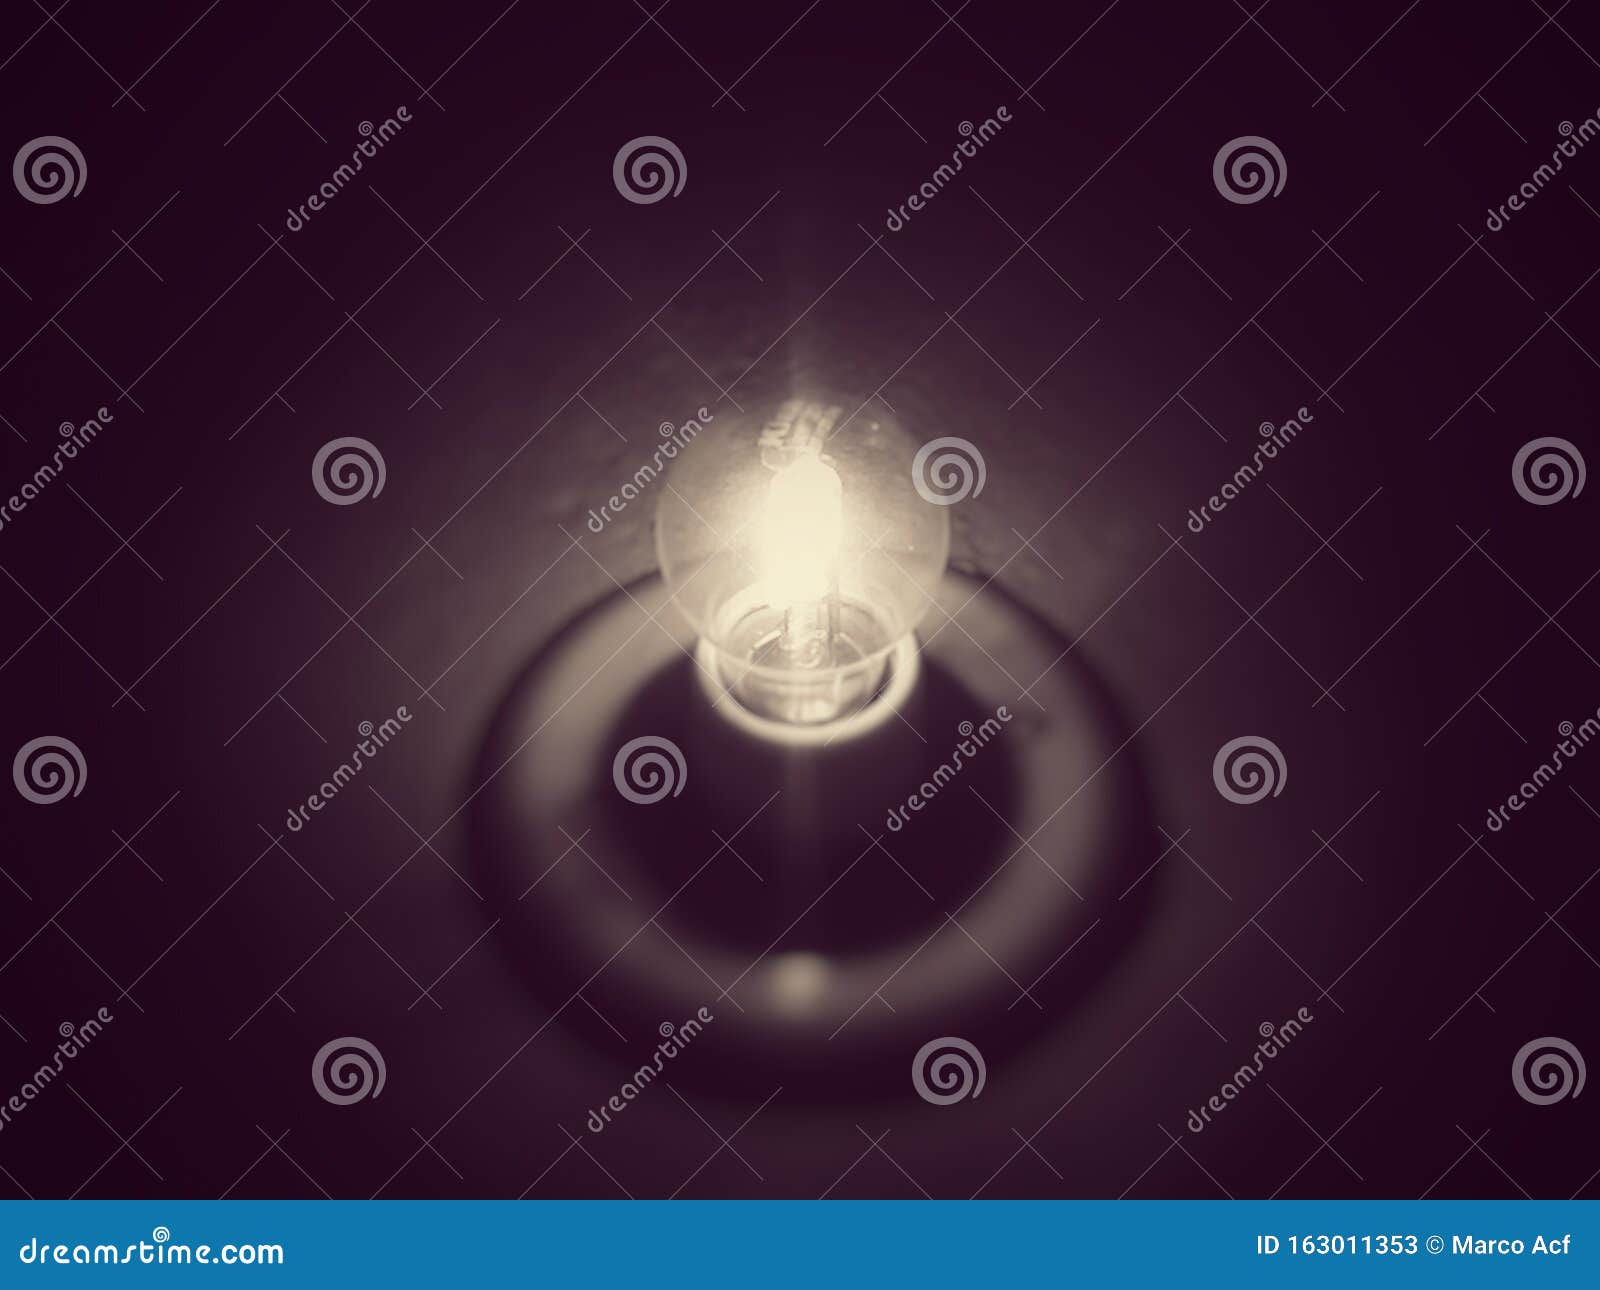 old light bulb on dark background, illuminating the darkness